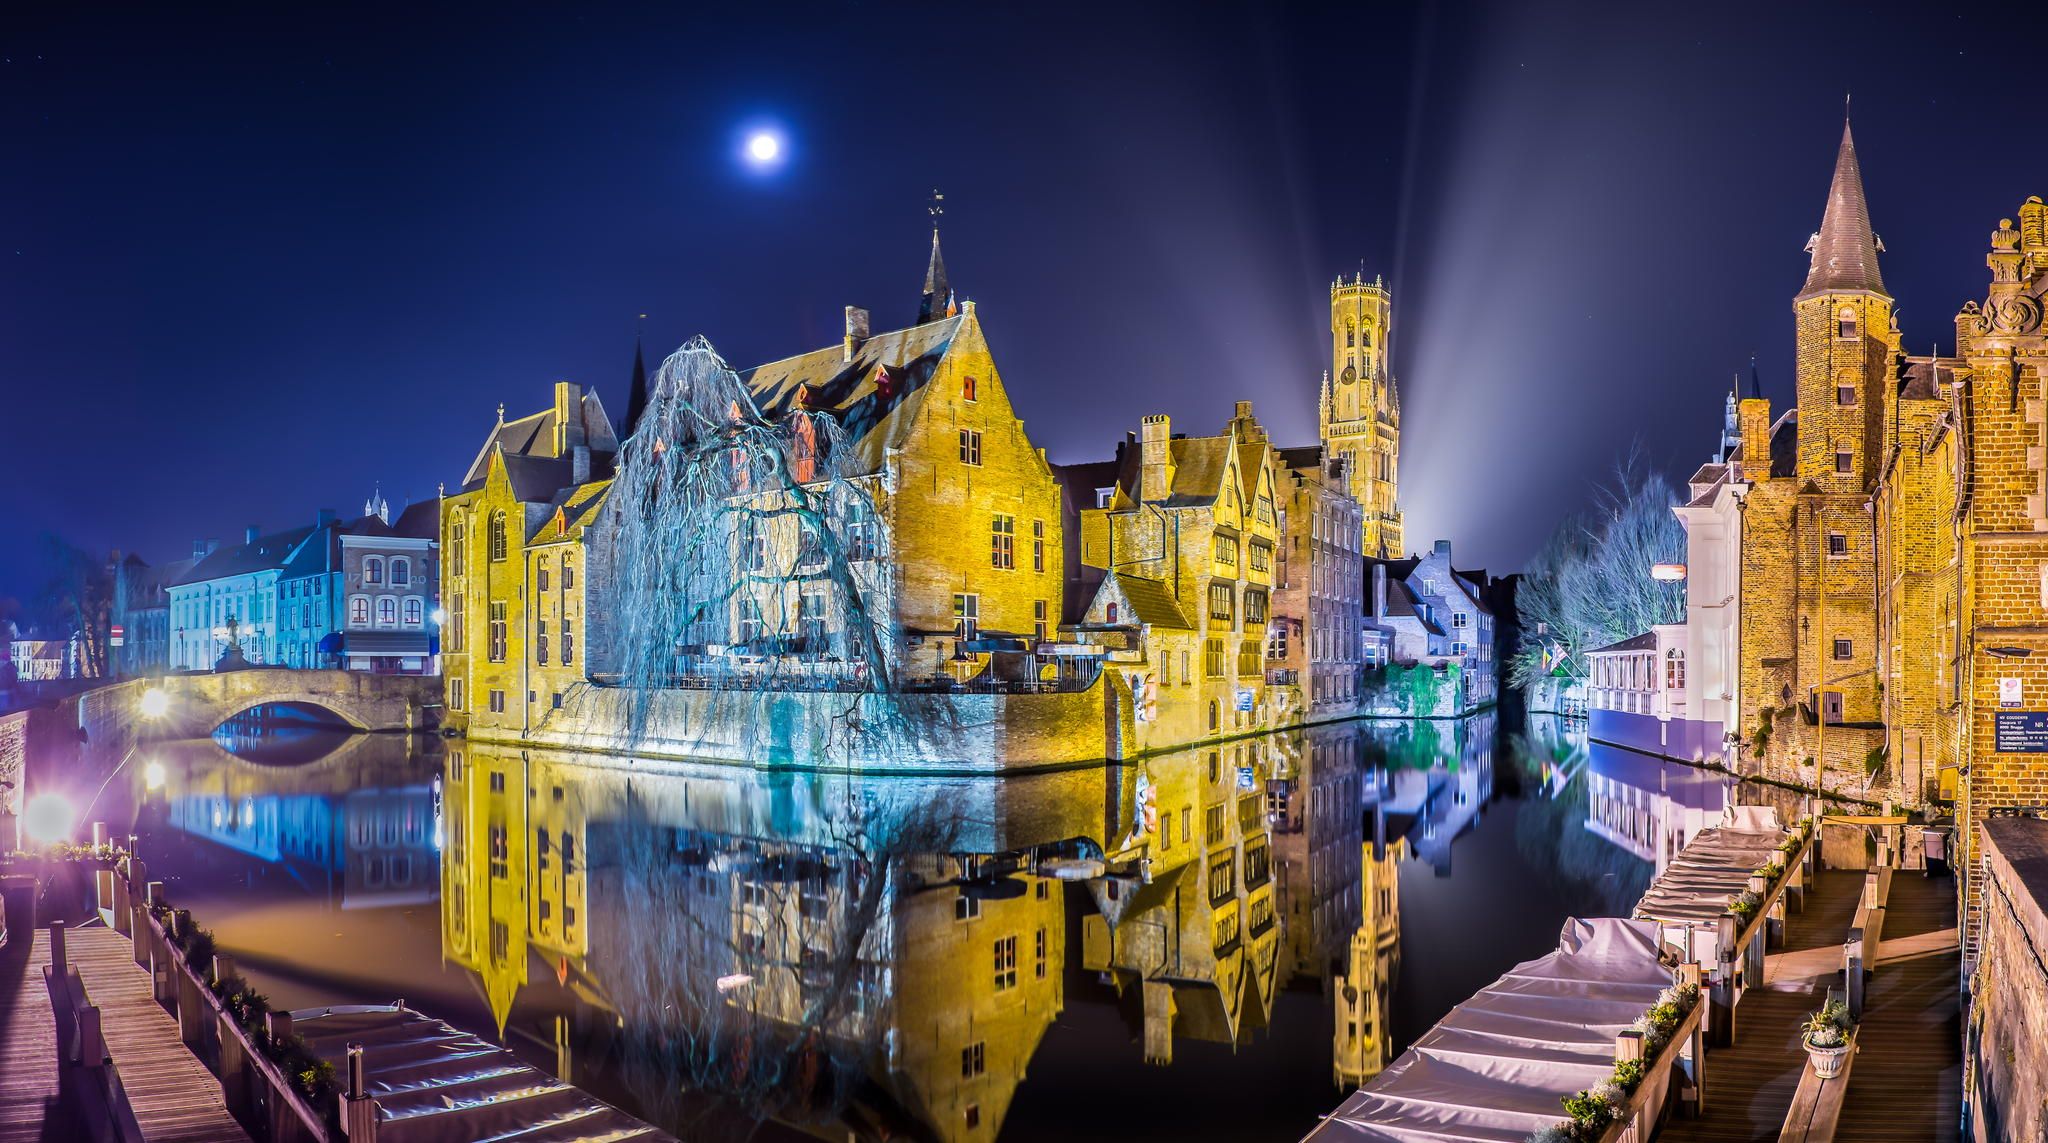 An amazing nighttime panorama of Bruges, Belgium, by Hans Van Kerckhoven